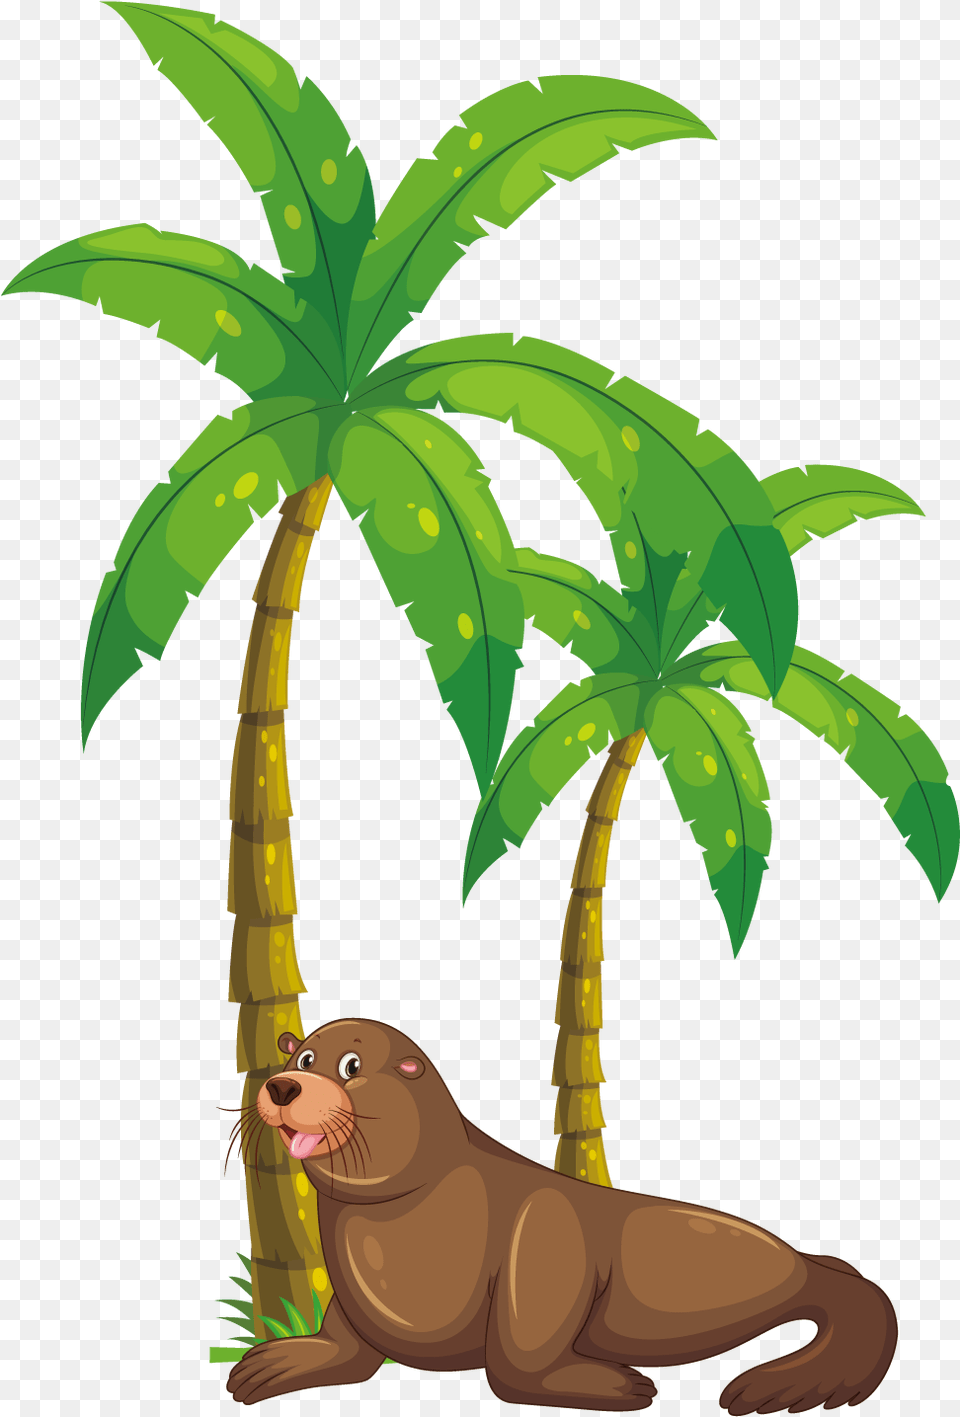 Palm Tree Clipart Kerala Coconut Tree Clipart Monkey Eating Banana, Plant, Vegetation, Jungle, Nature Free Png Download